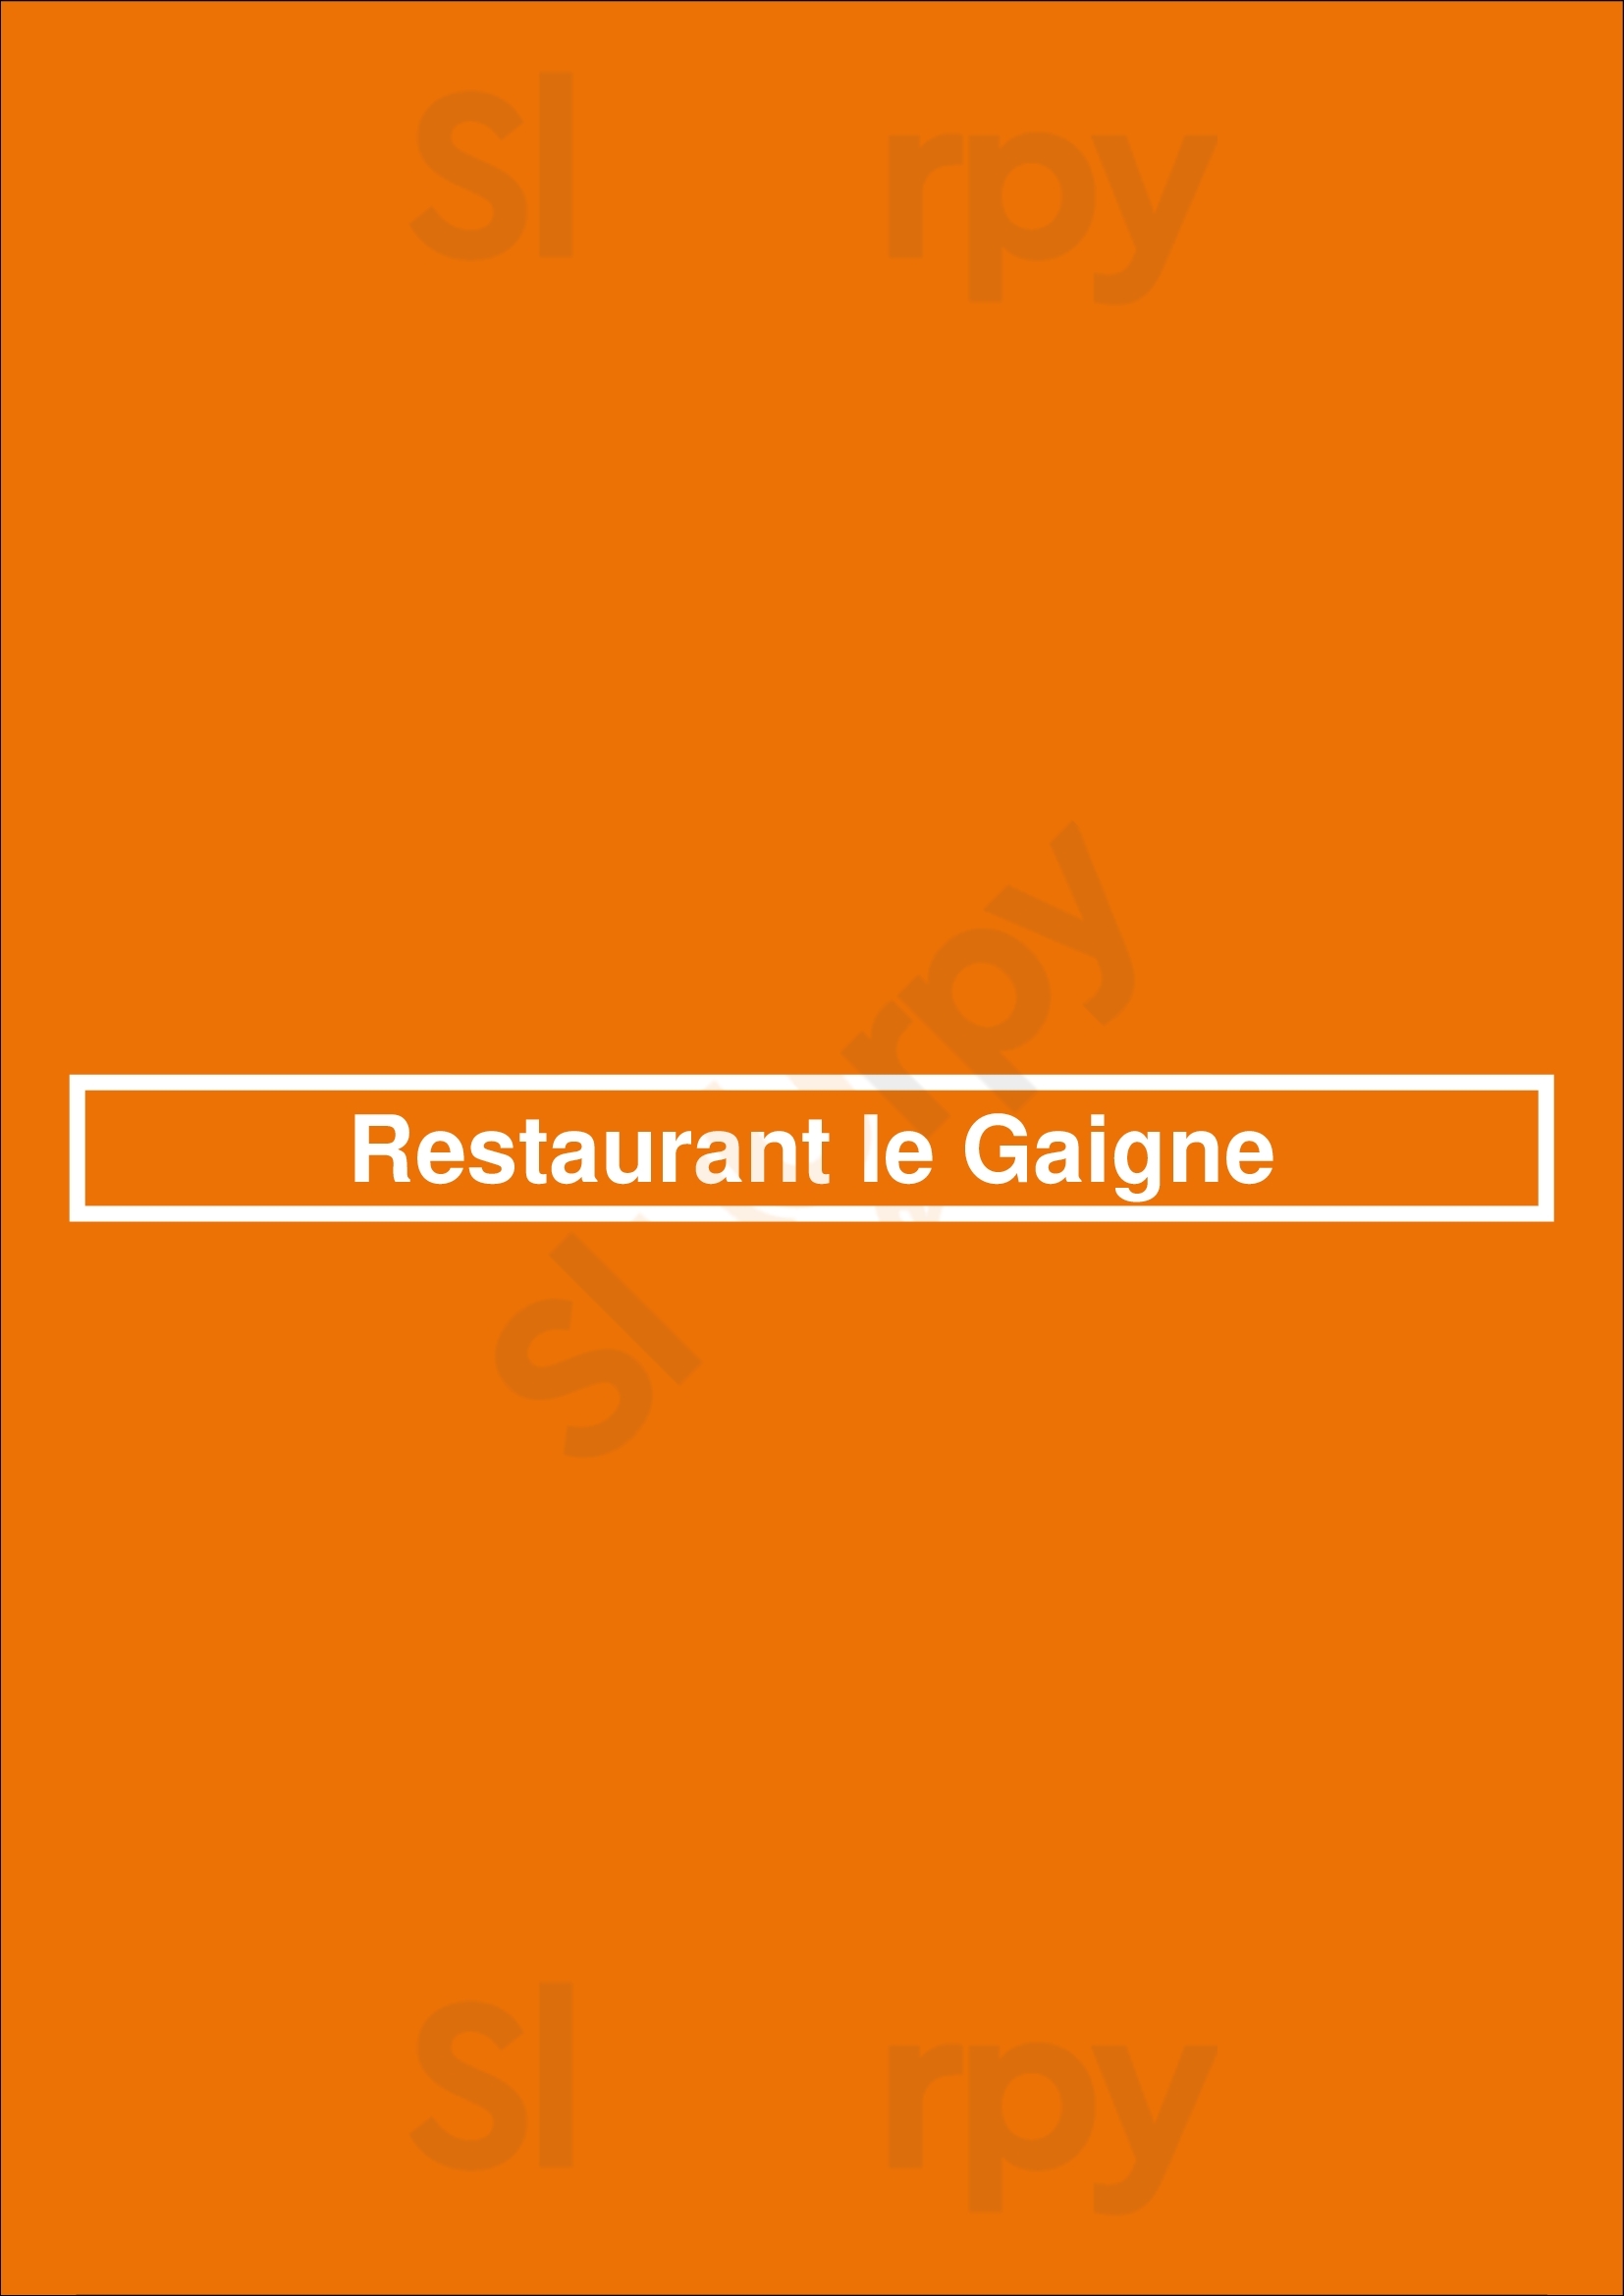 Restaurant Le Gaigne Paris Menu - 1